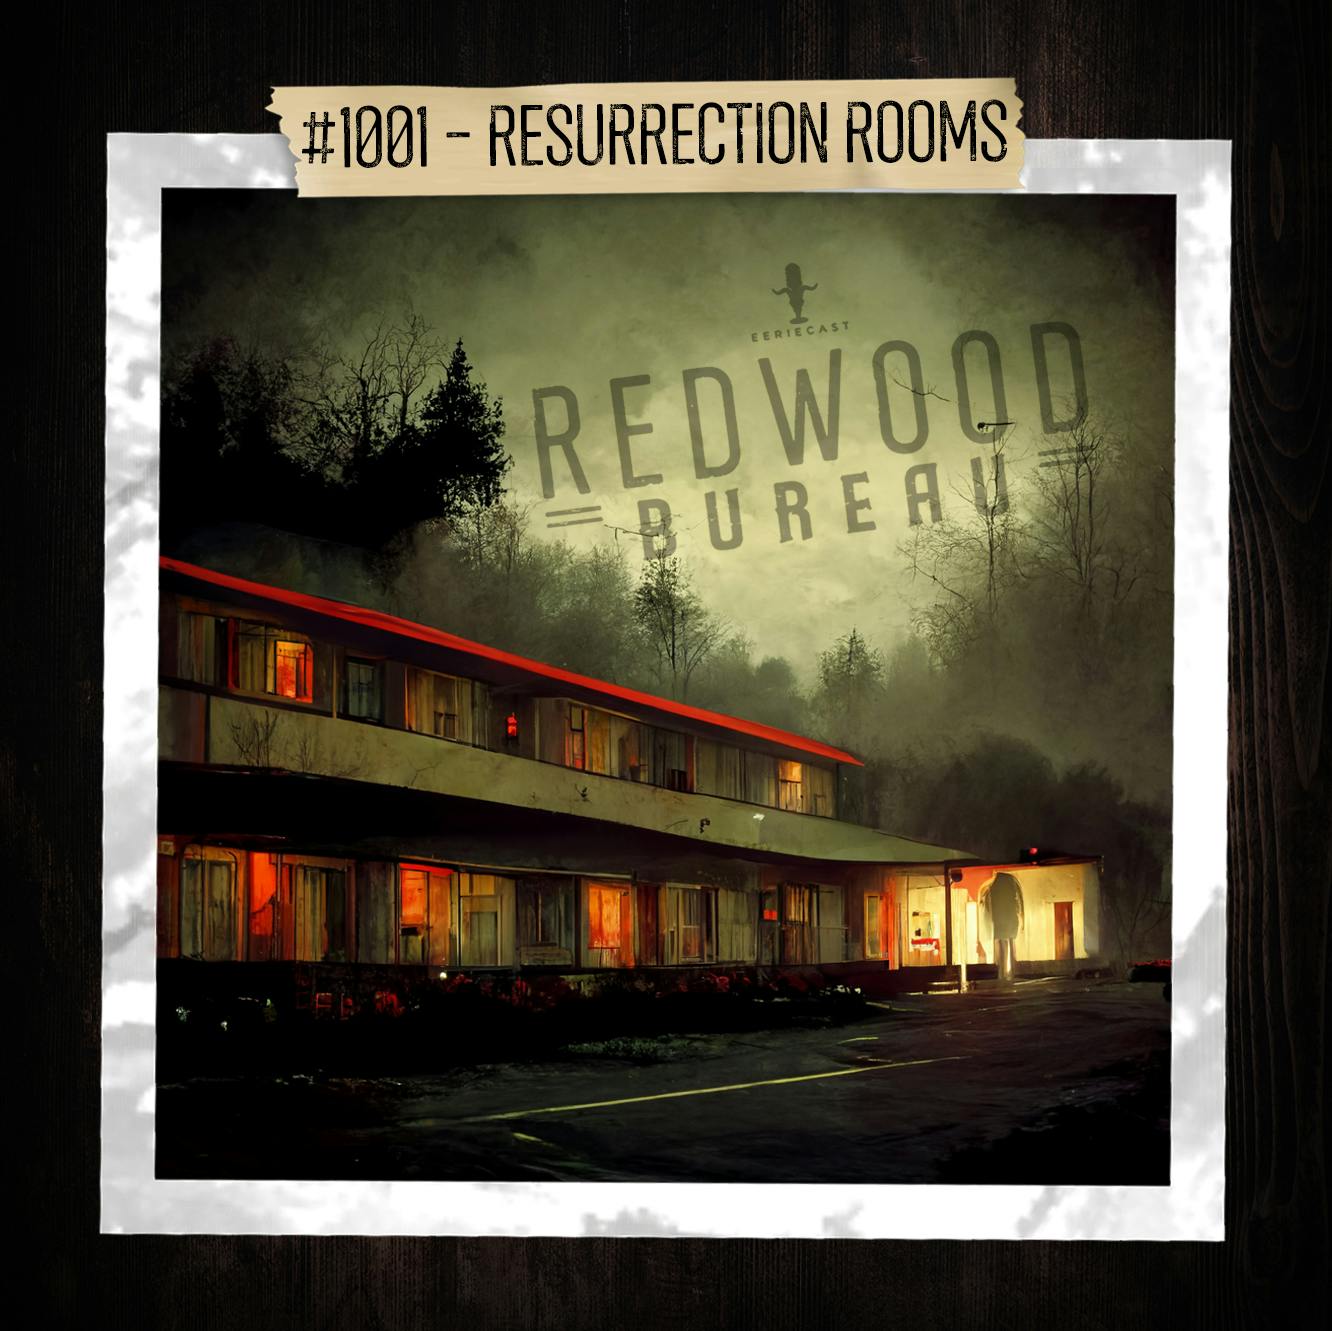 "THE RESURRECTION ROOMS" - Redwood Bureau Phenomenon #1001